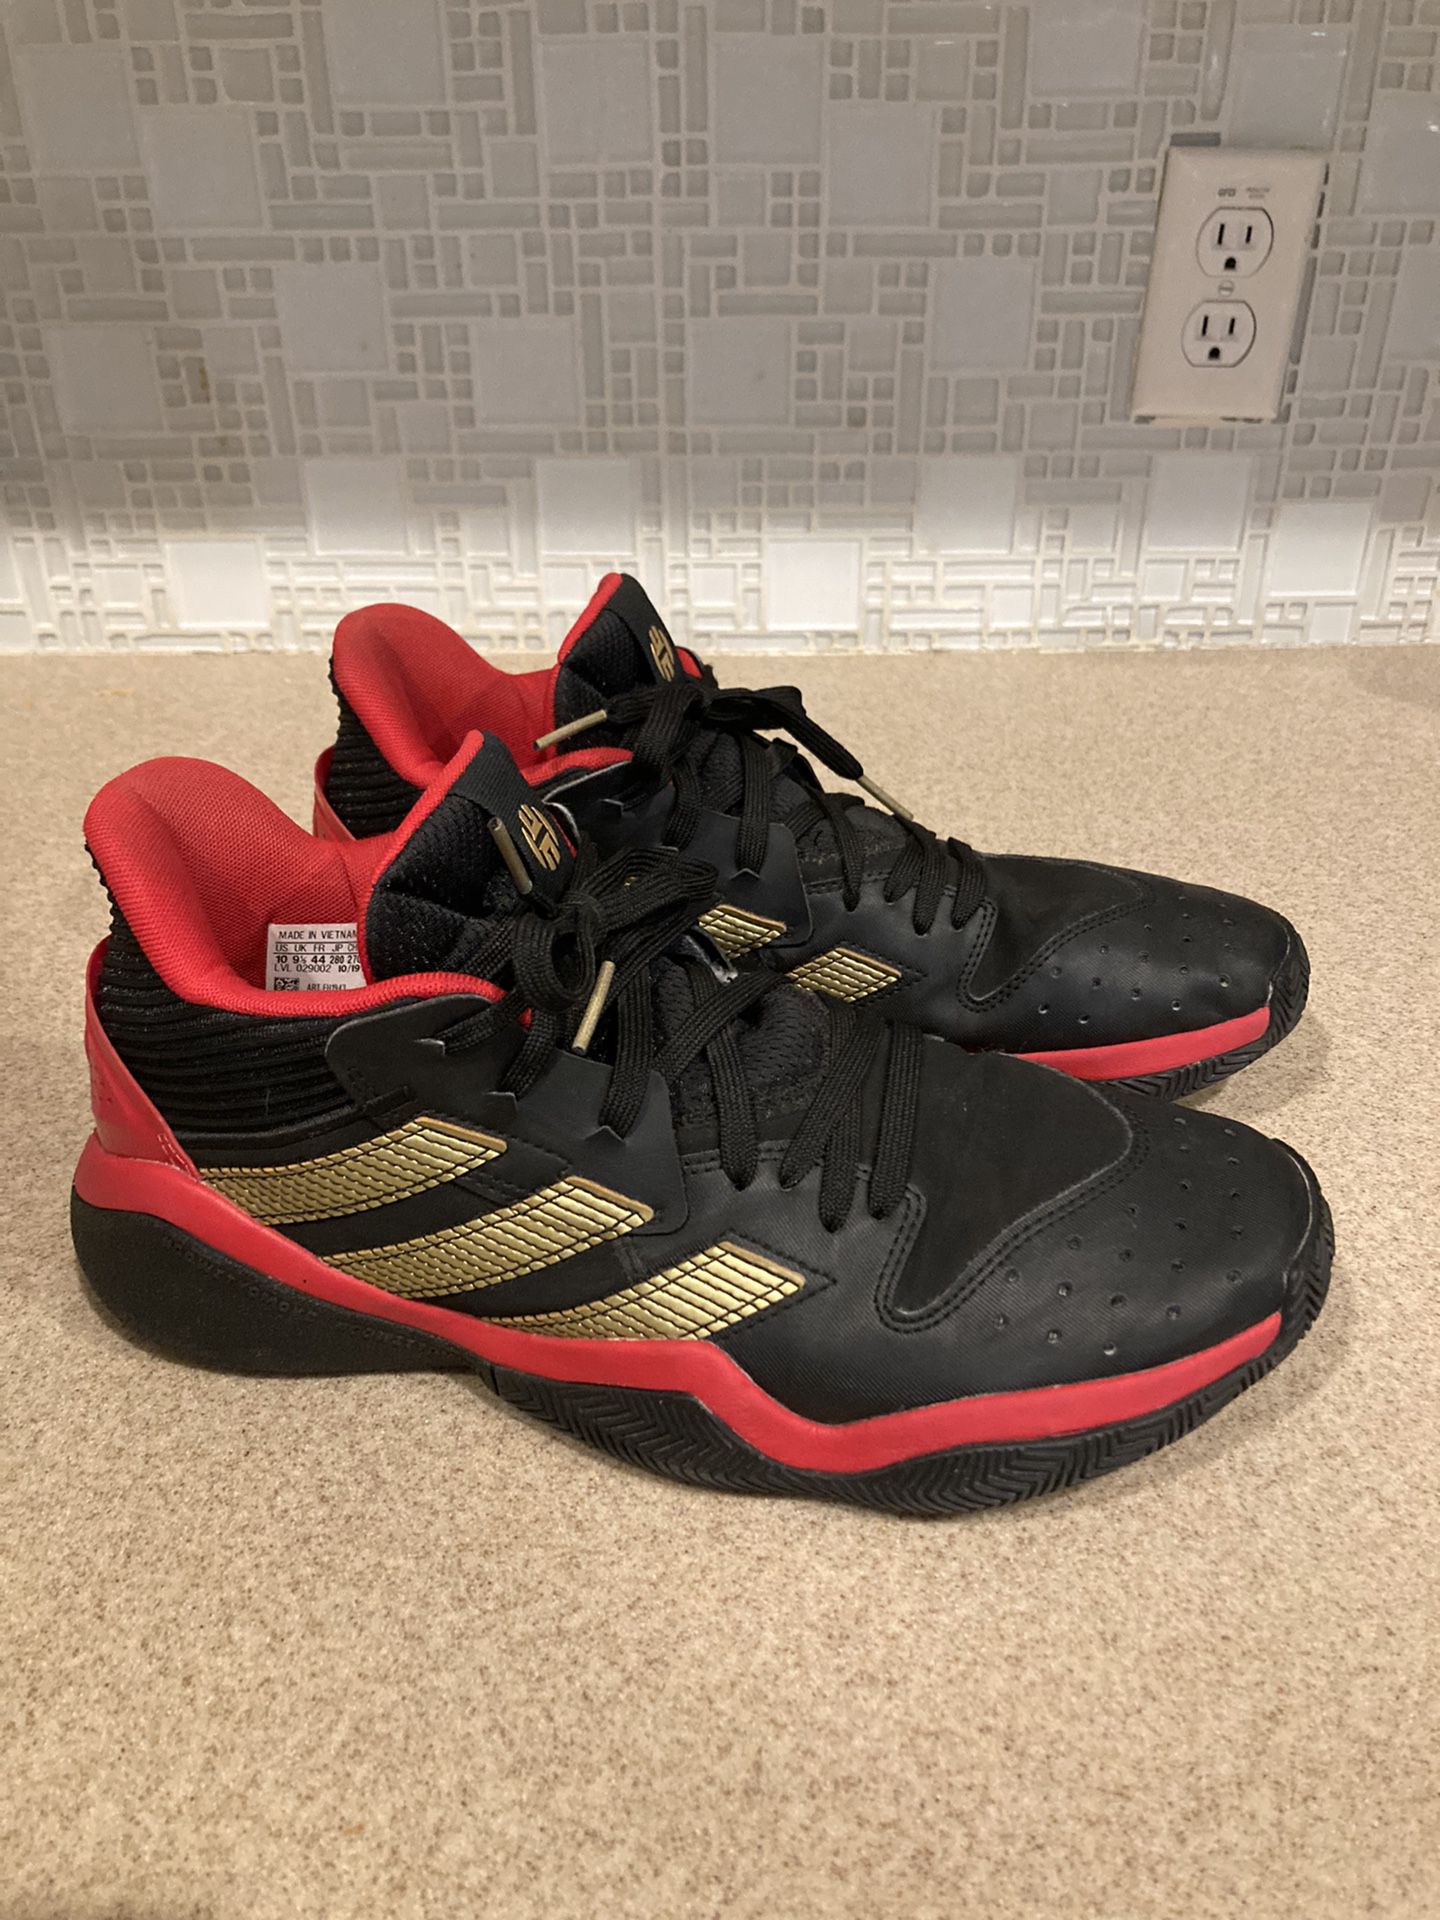 Adidas James Harden Bounce Stepback Black/Red Basketball Shoes Men’s Size 10